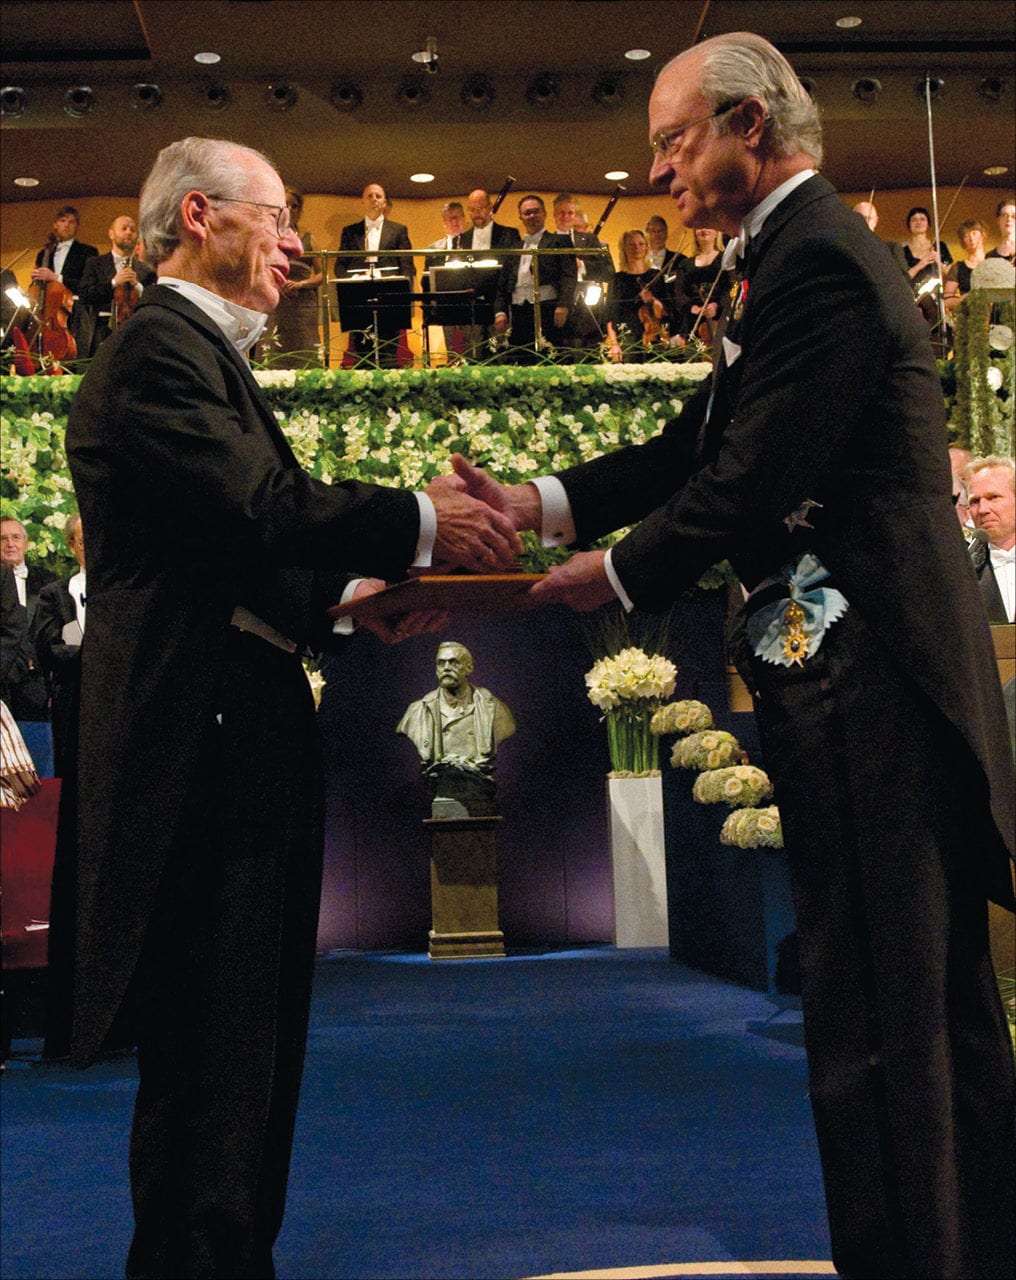 Oliver Williamson (left) receives the Nobel Prize in Economic Sciences from His Majesty King Carl XVI Gustaf of Sweden at the Stockholm Concert Hall on December 10, 2009.